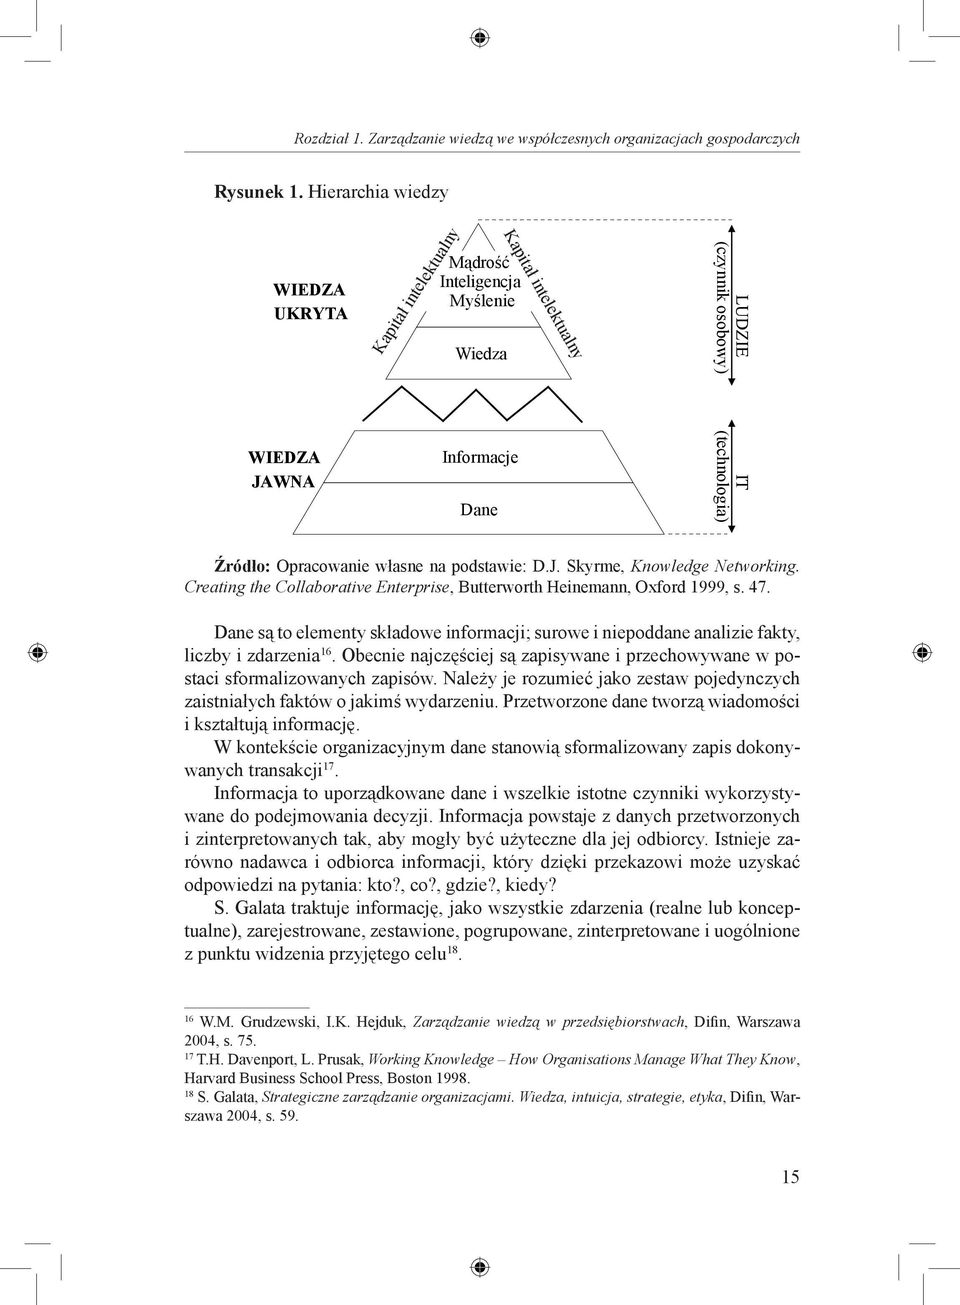 Opracowanie własne na podstawie: D.J. Skyrme, Knowledge Networking. Creating the Collaborative Enterprise, Butterworth Heinemann, Oxford 1999, s. 47.